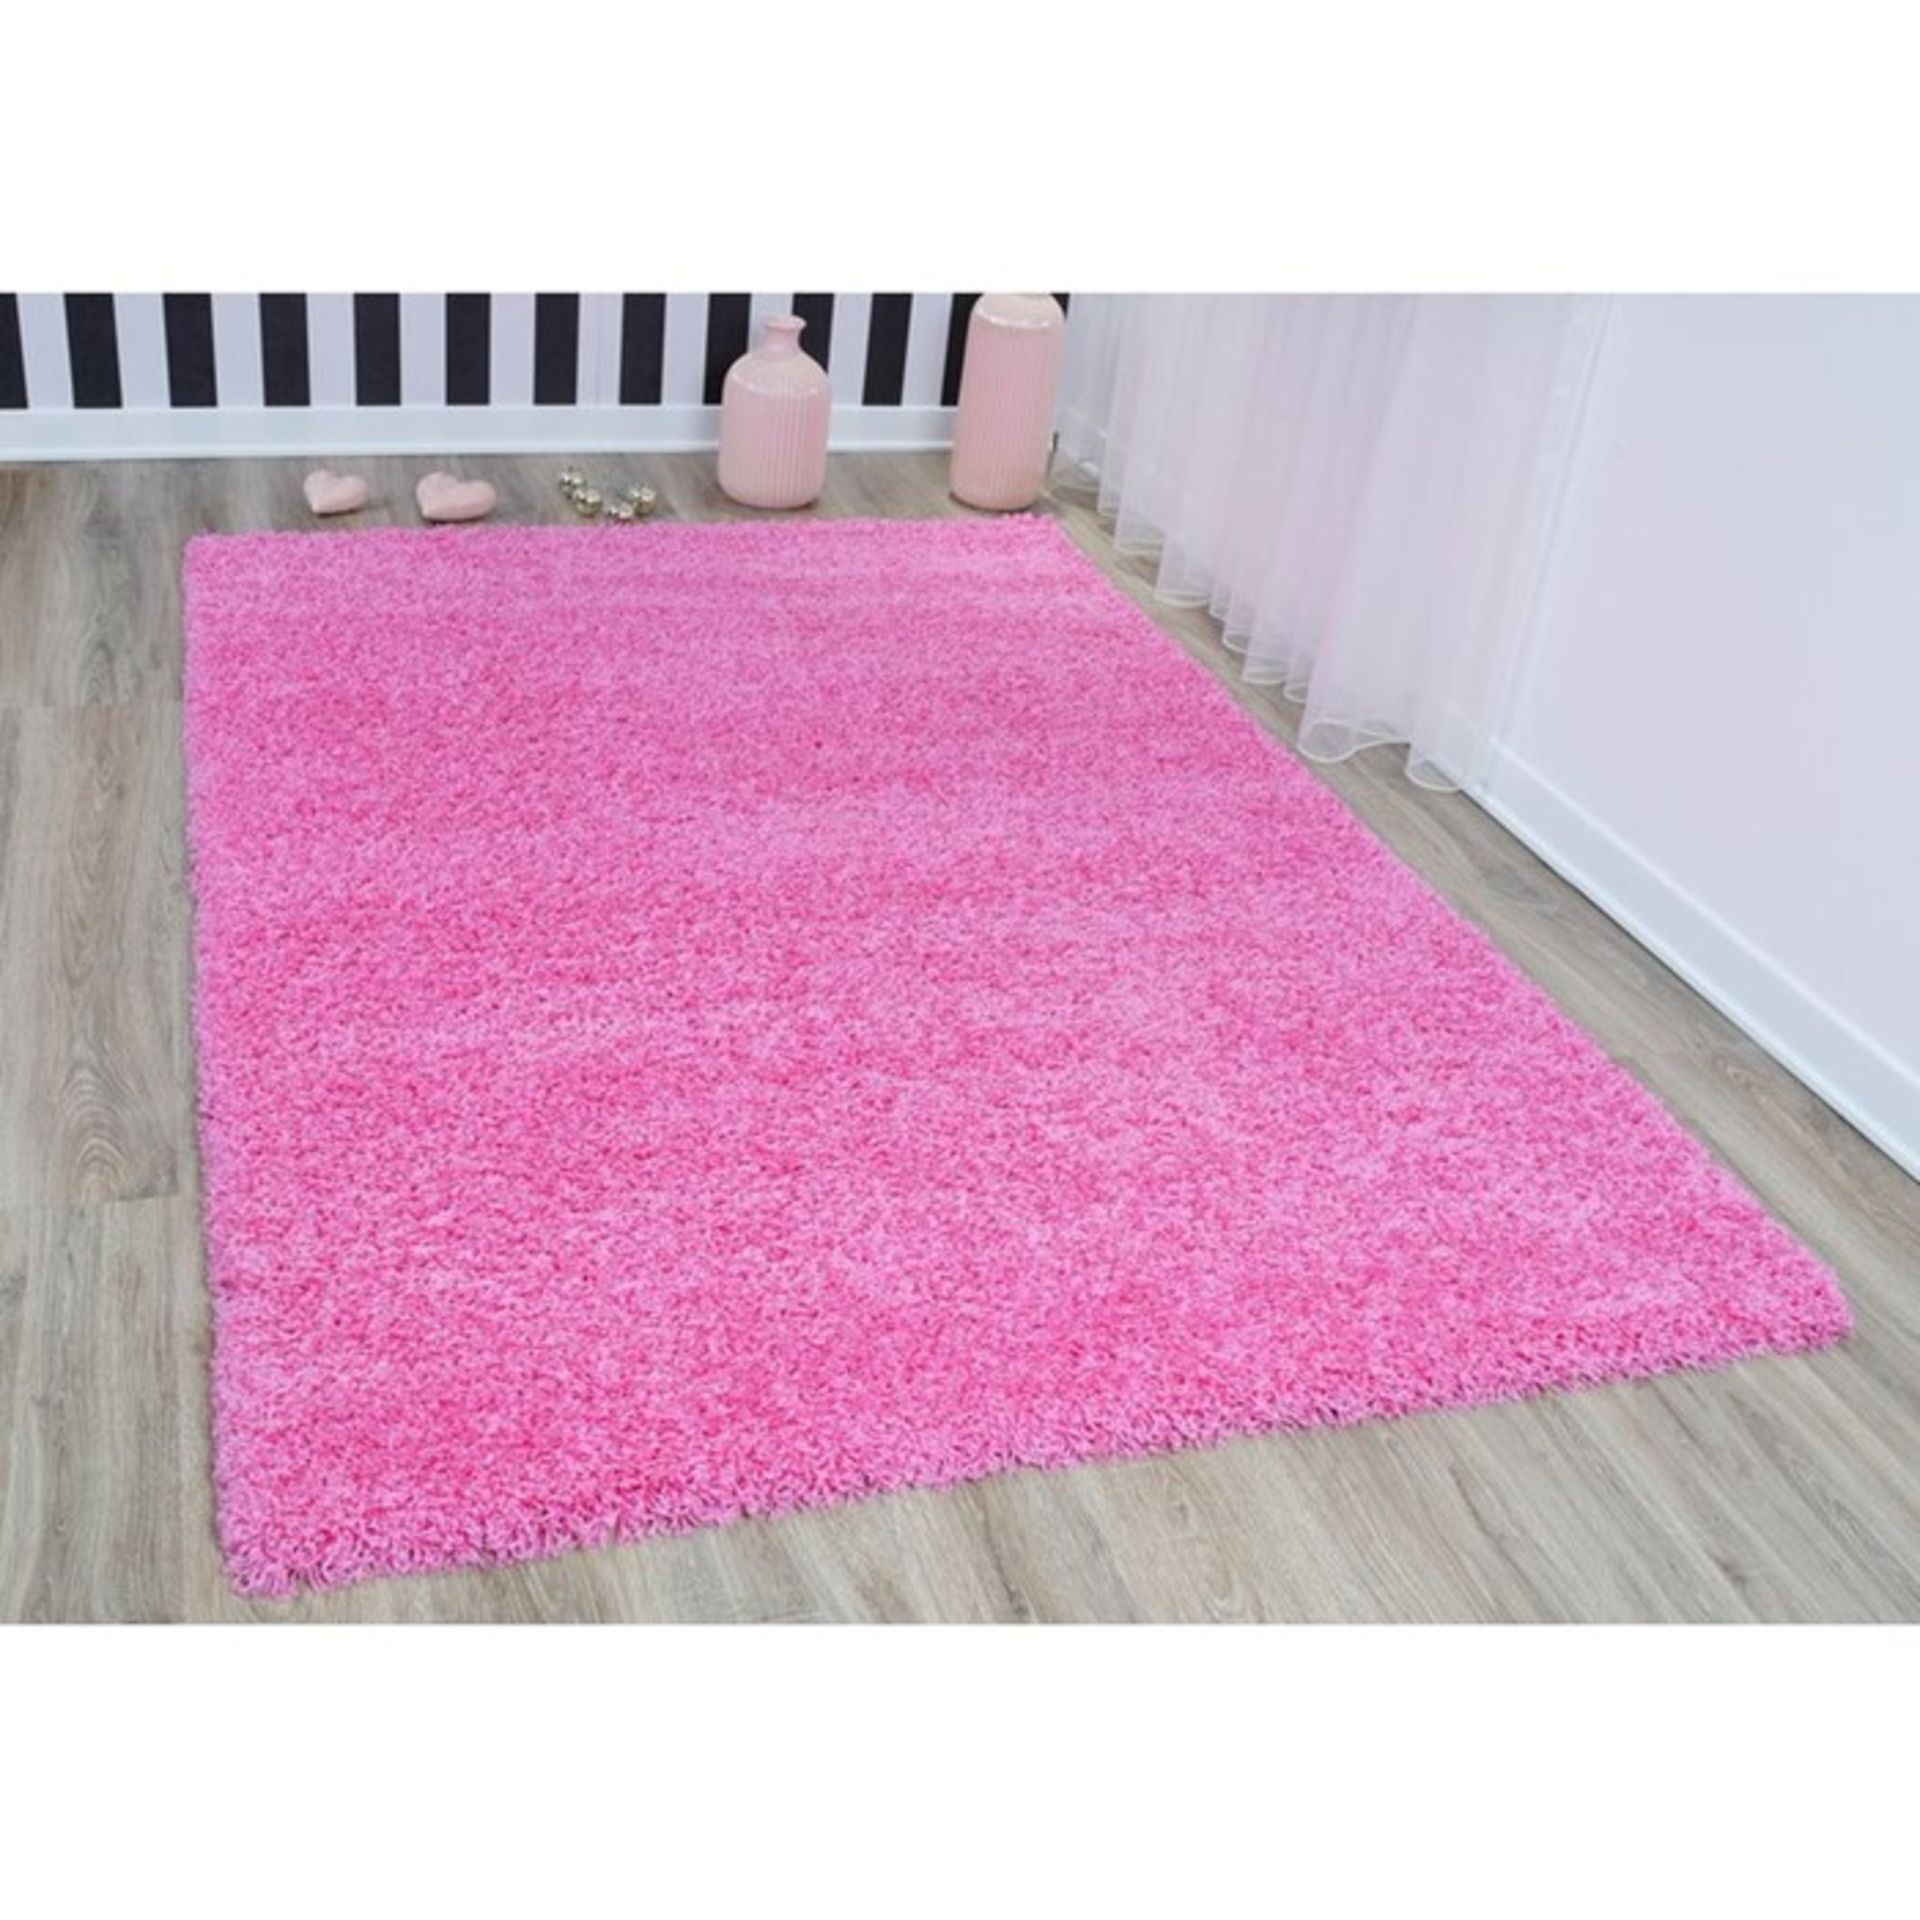 17 Stories Griff Pink Rug (120x170cm)(CCOO3200 - 16851/1)